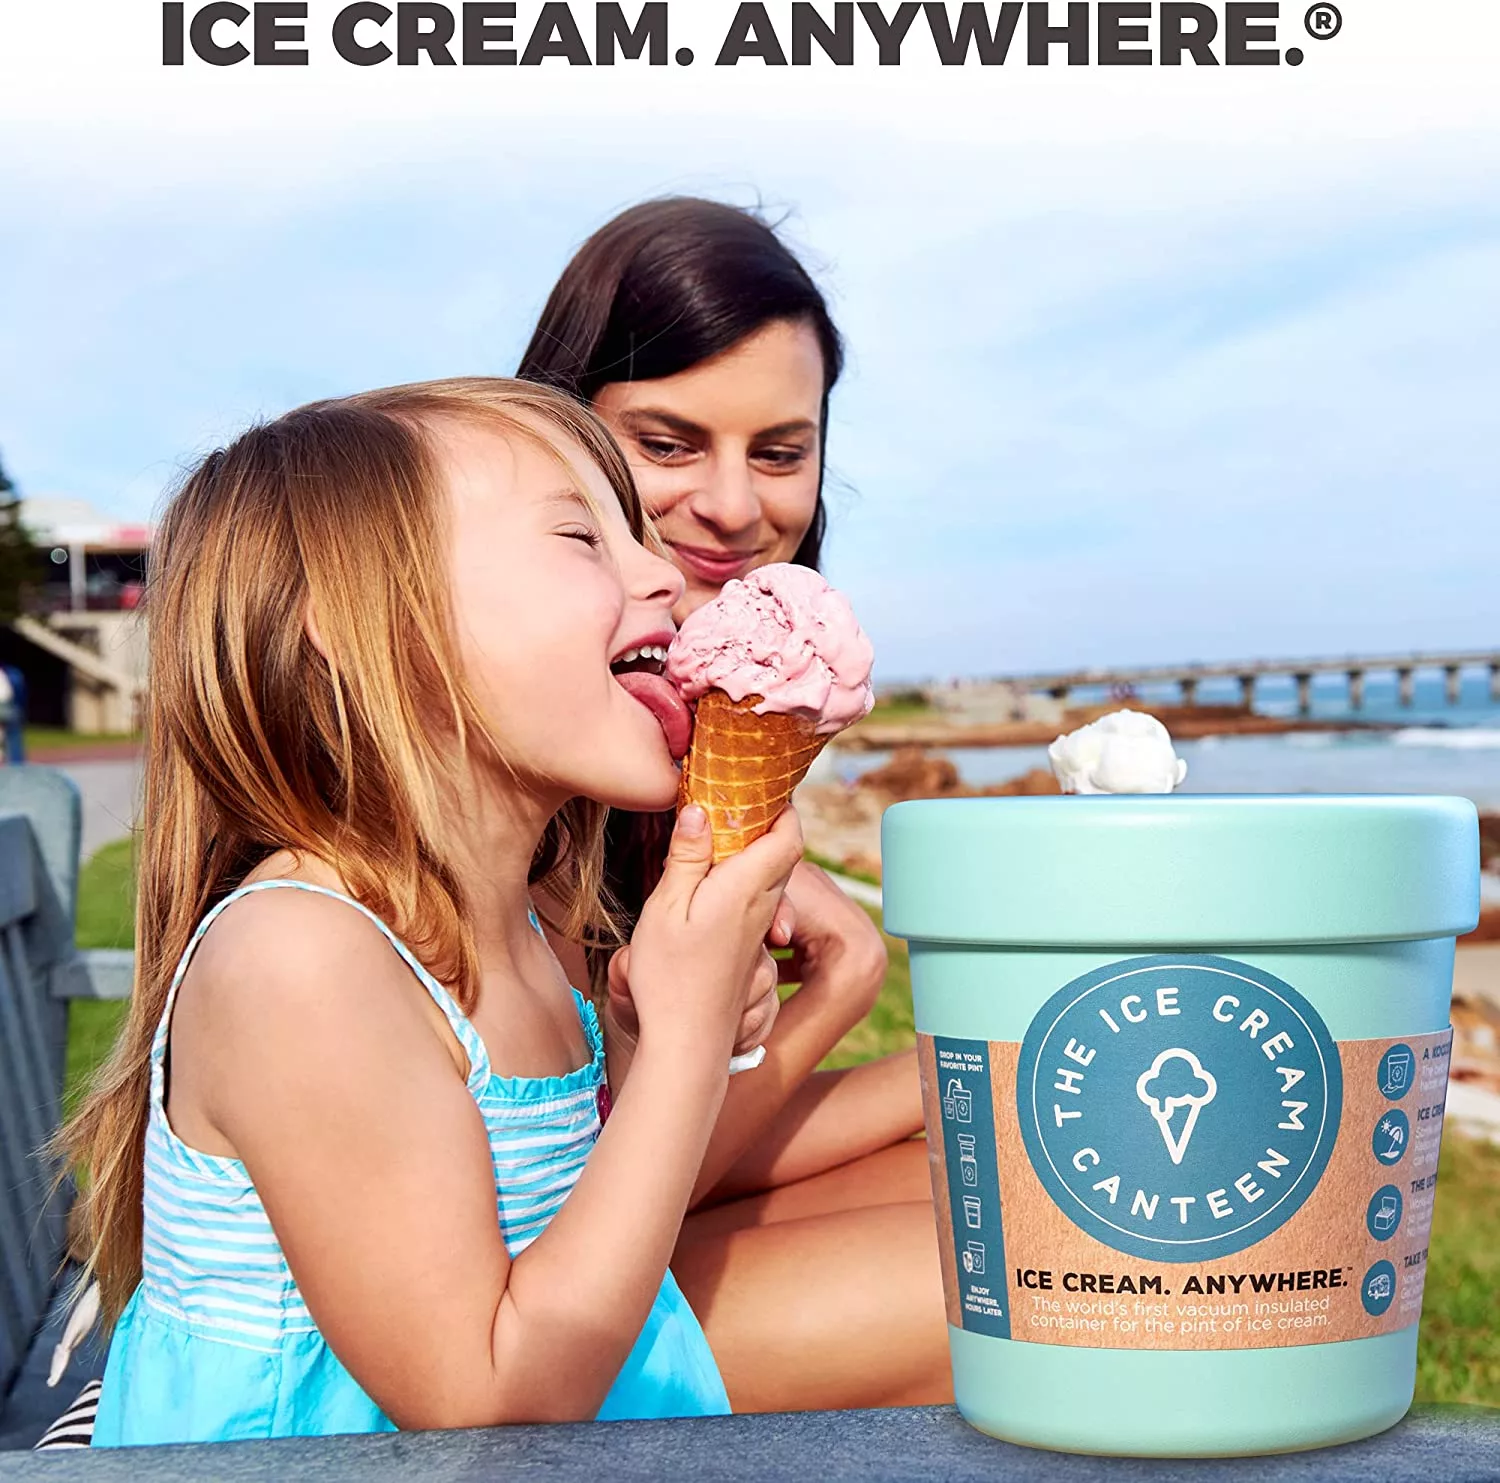 Enjoy Ice Cream Anywhere with The Ice Cream Canteen